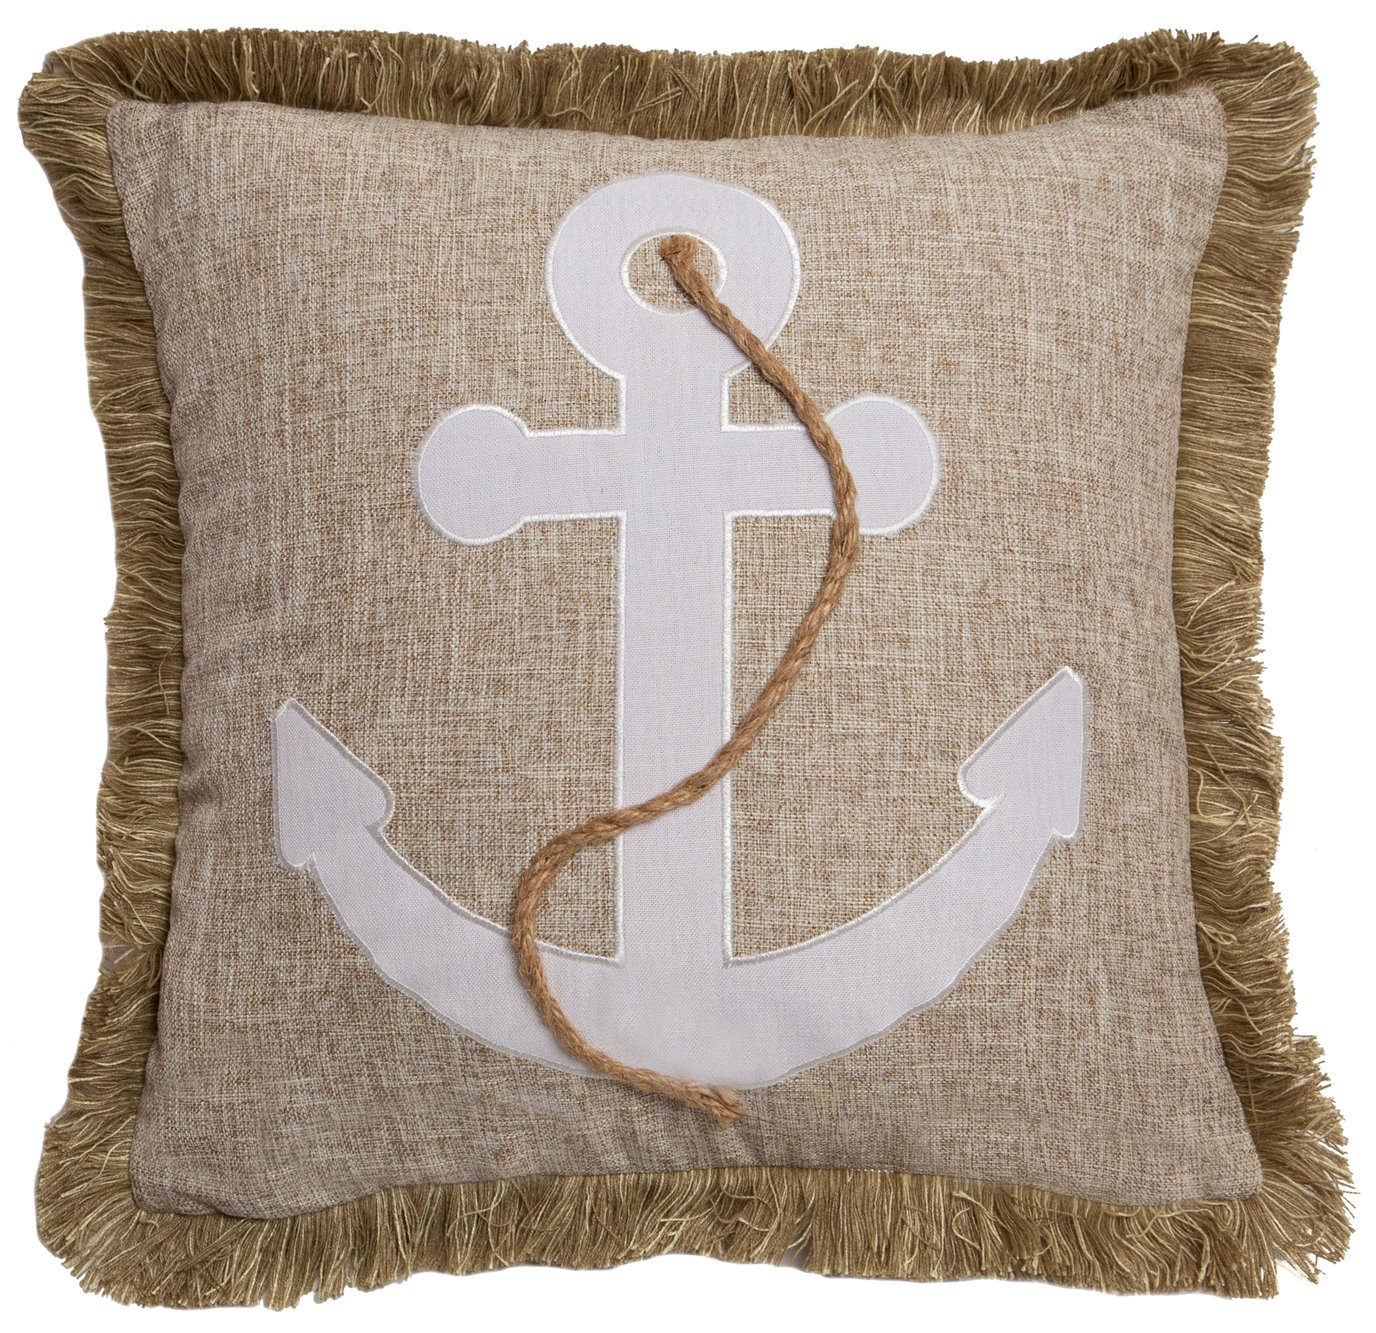 Anchors Away Nautical Coastal Throw Pillow (Insert Included) 18" x 18"